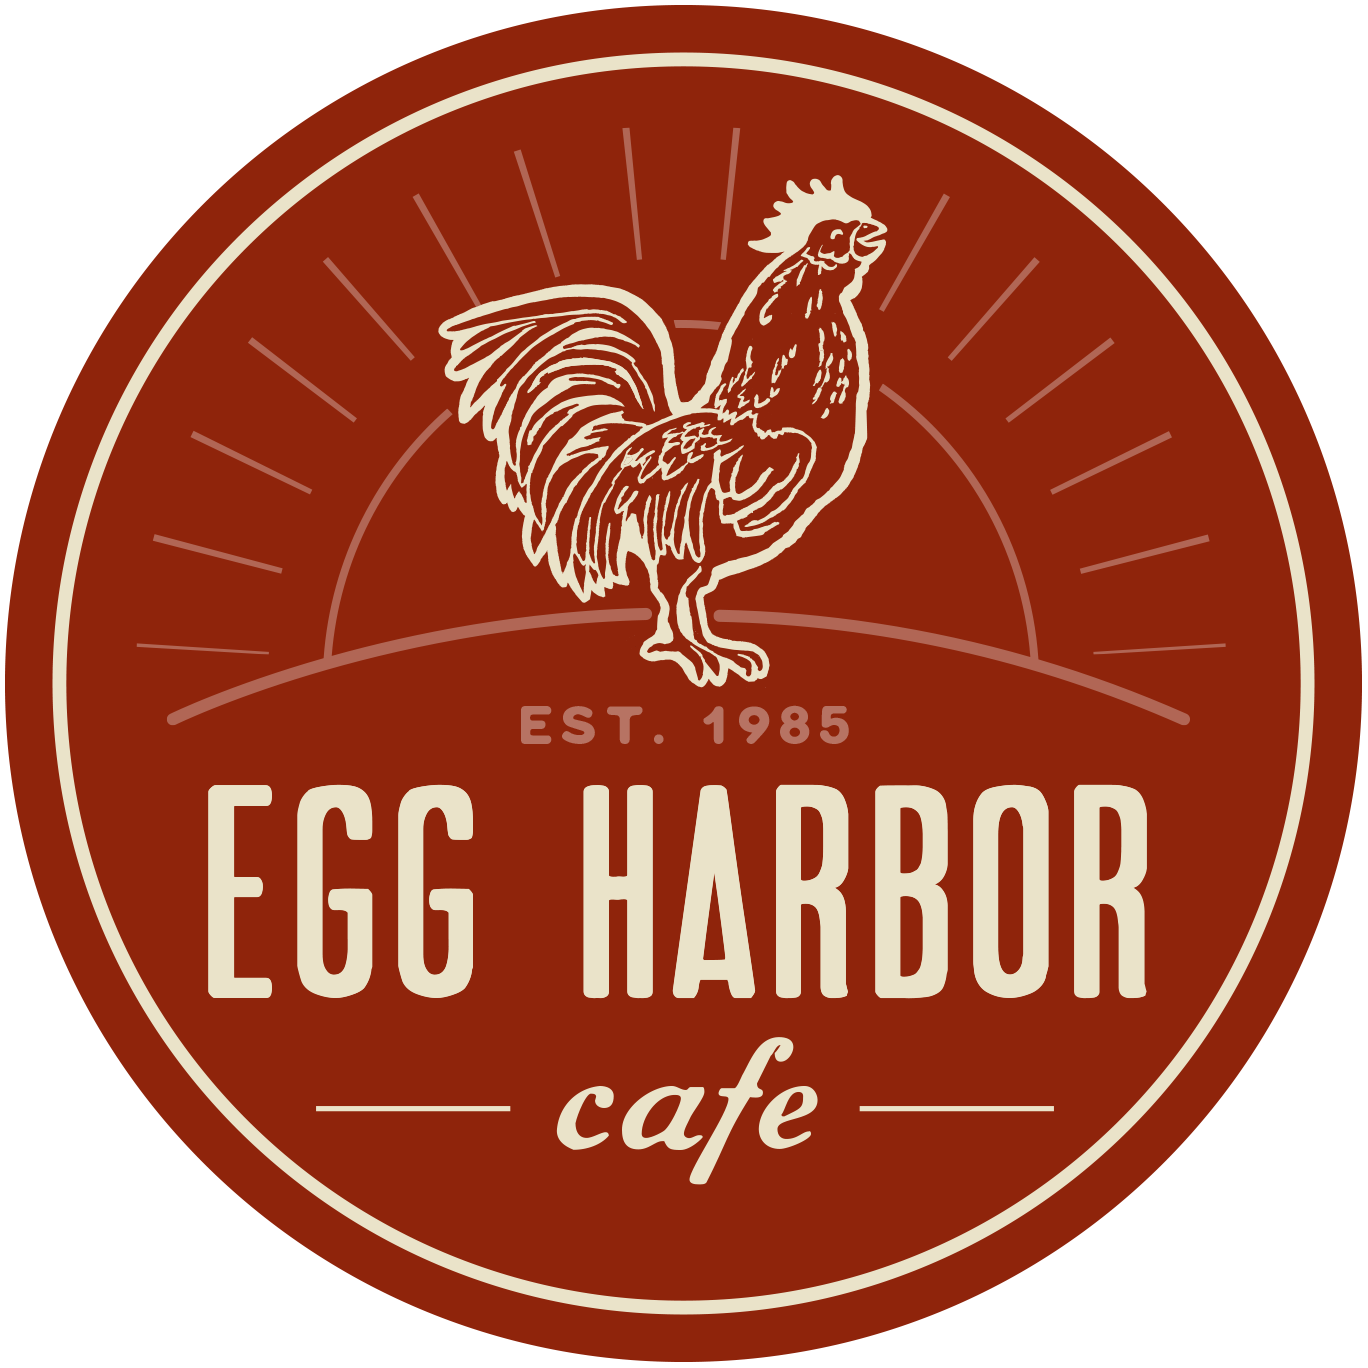 EggHarbor